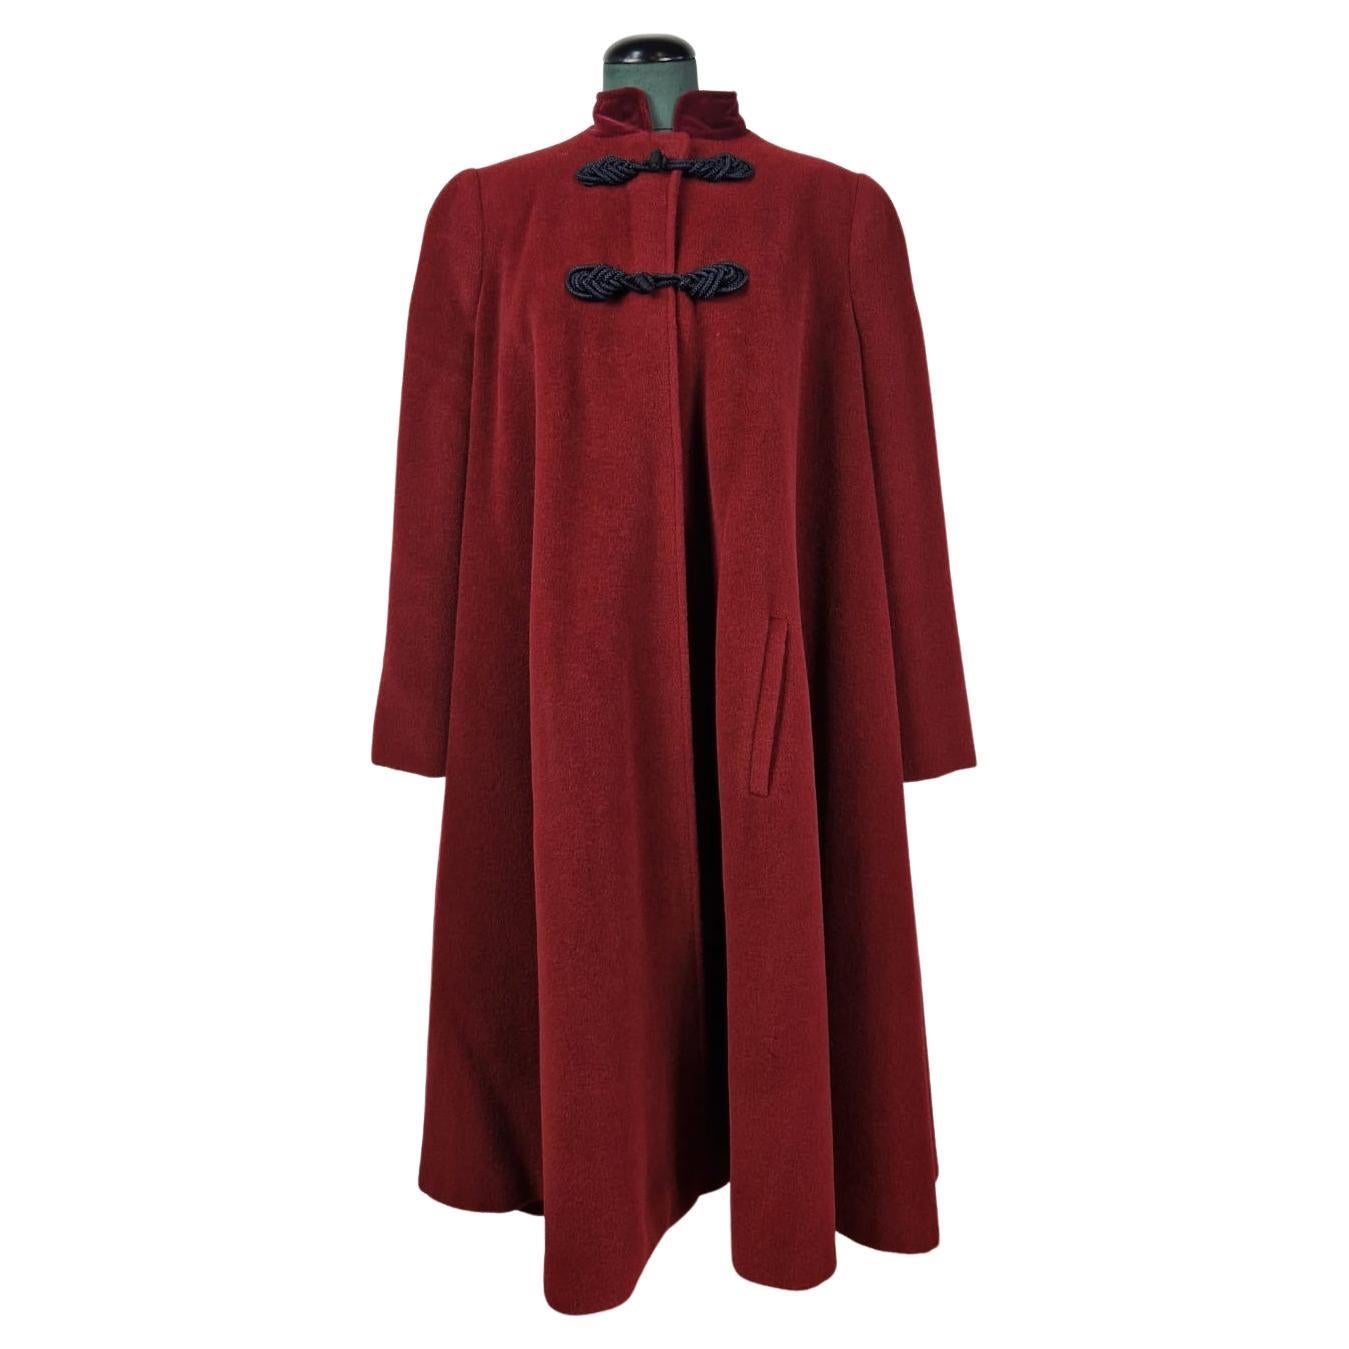 Valentino coat in burgundy wool.